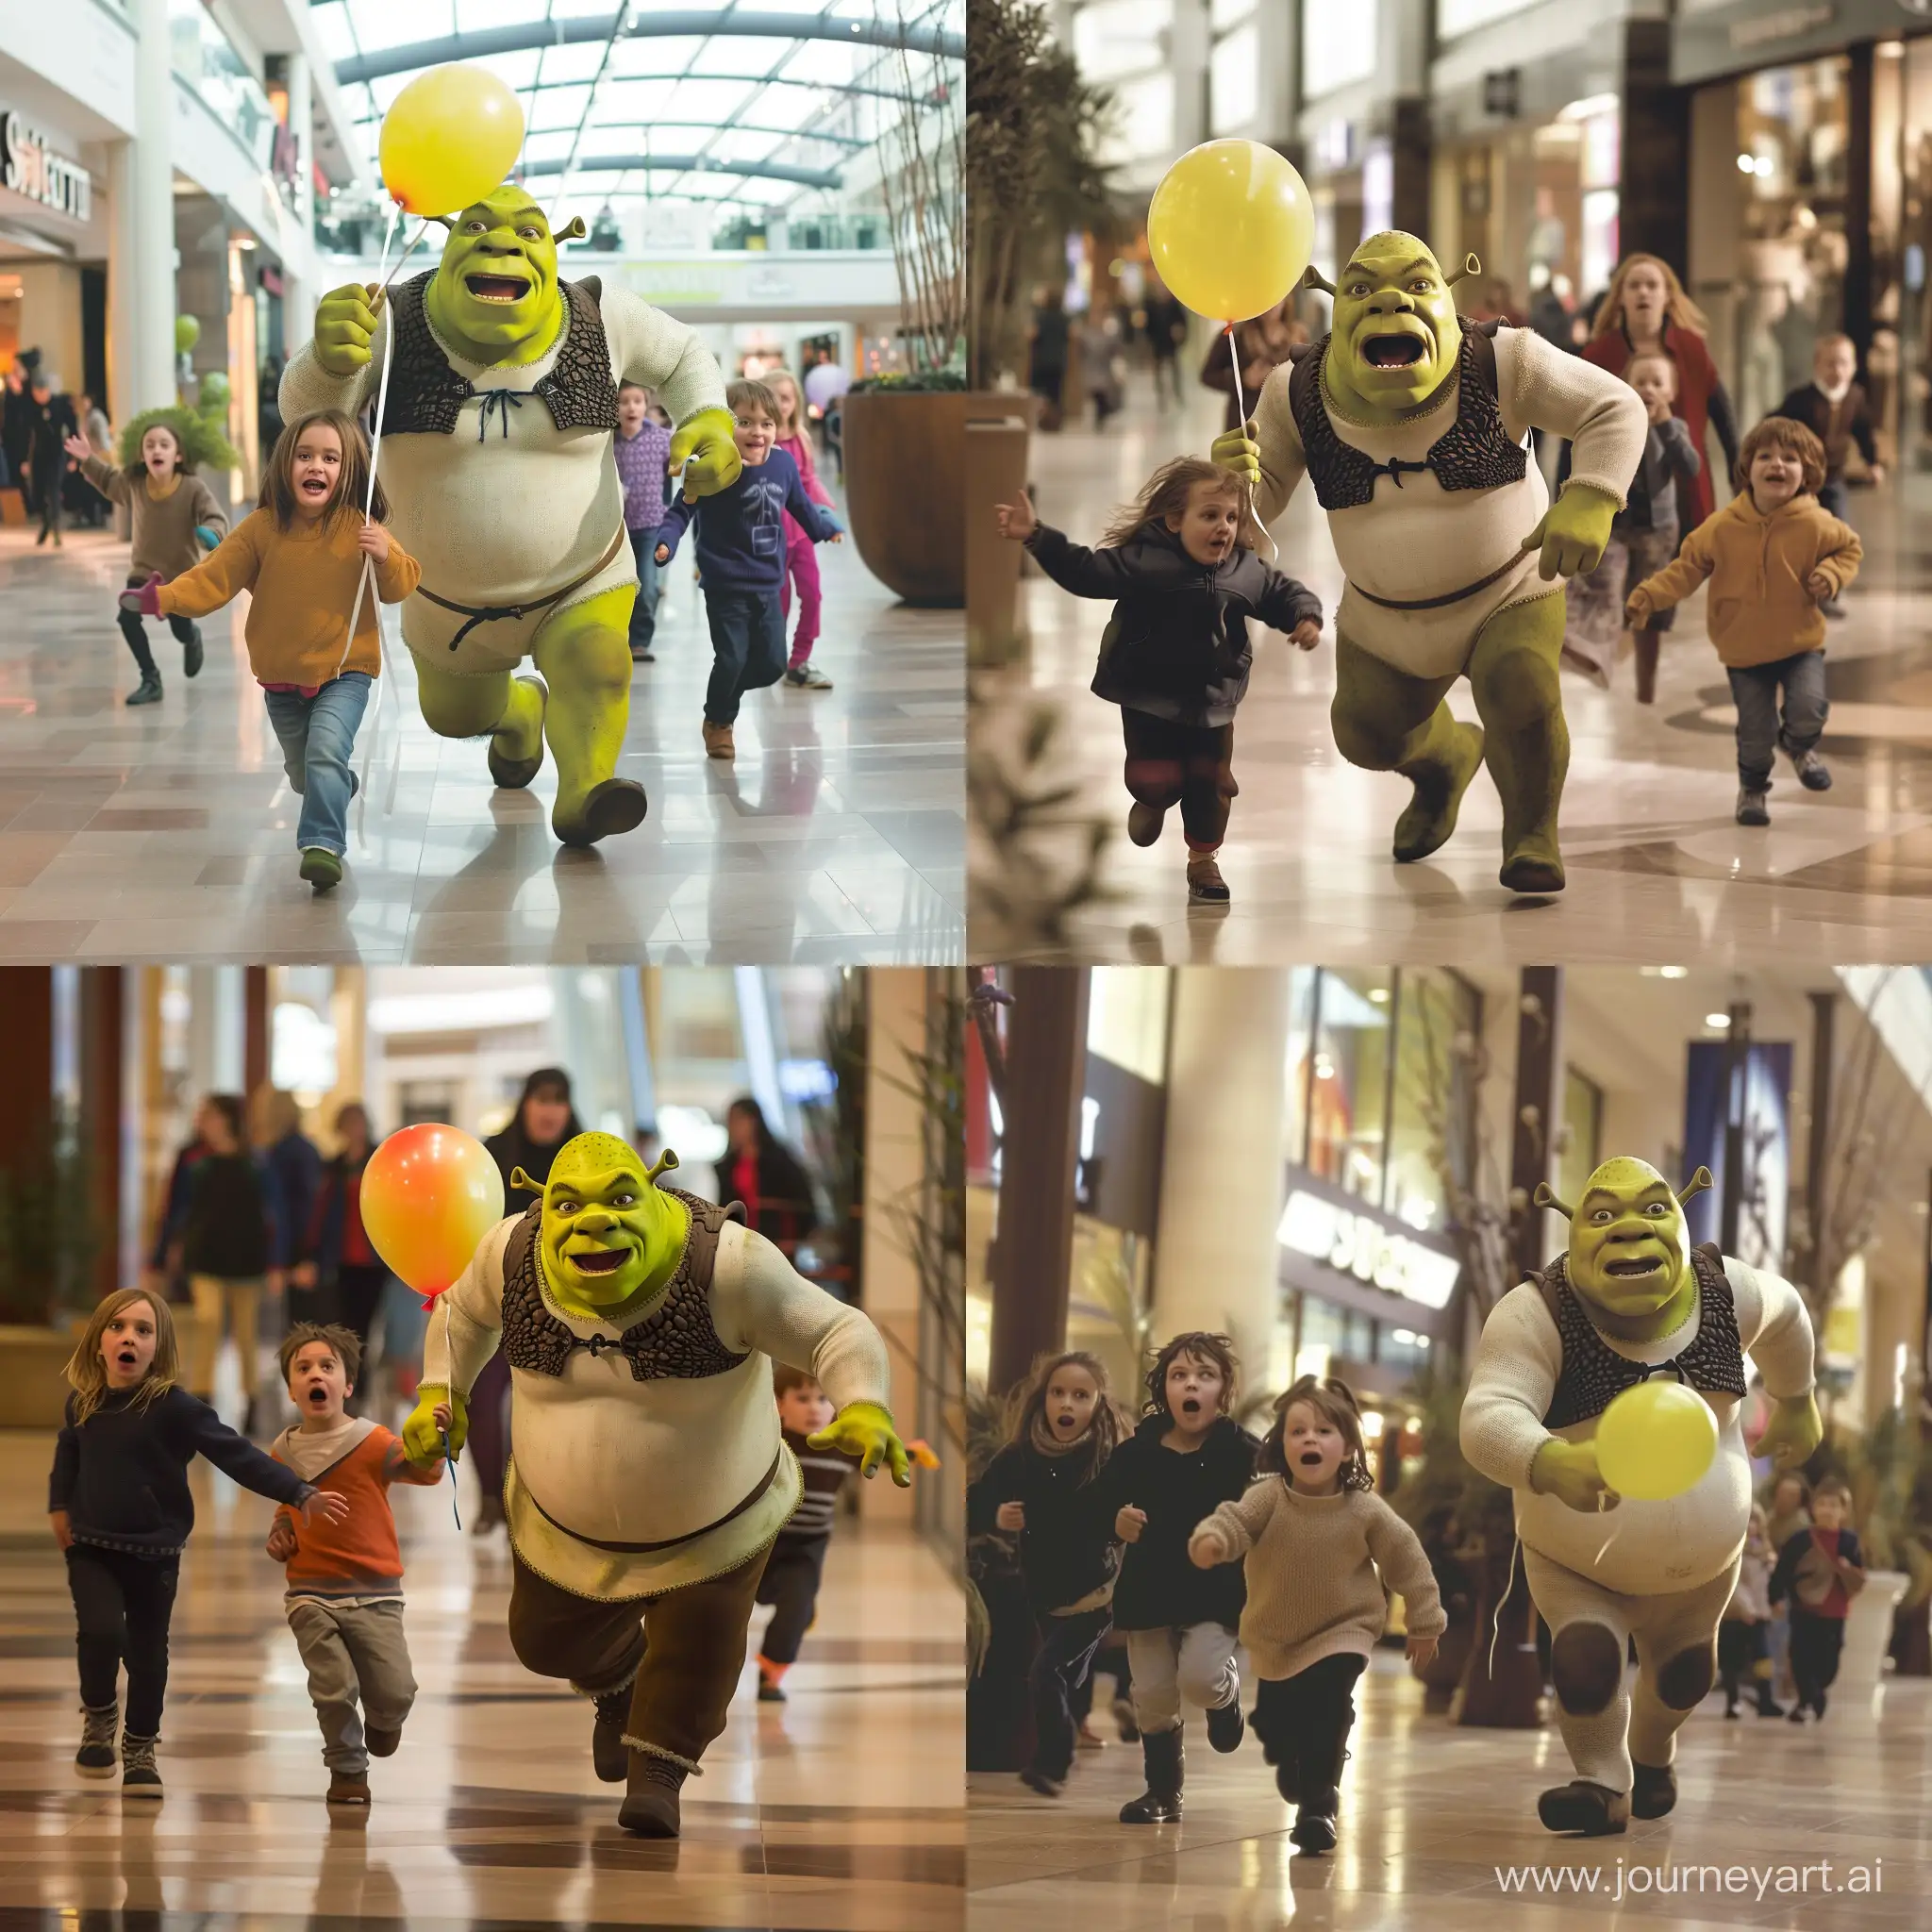 Startling-Encounter-Kids-Fleeing-Shrek-with-Balloon